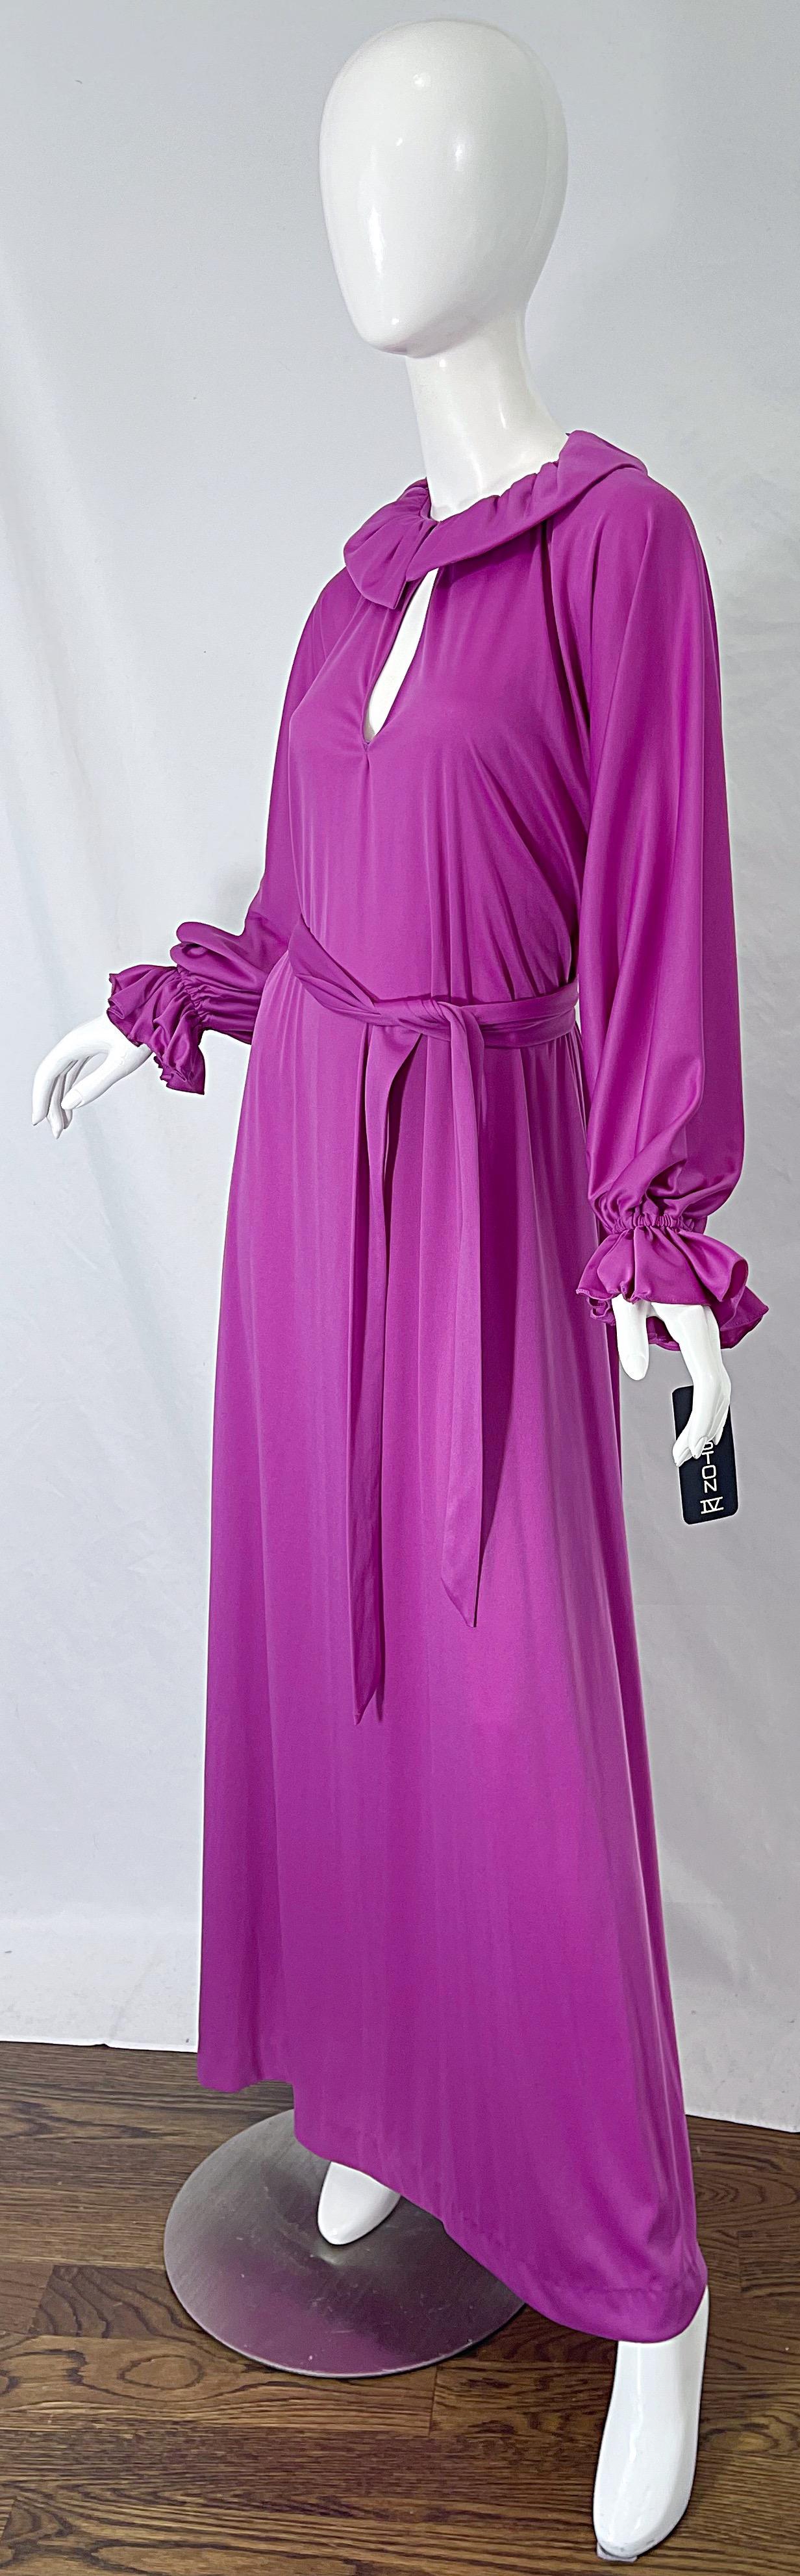 halston purple dress